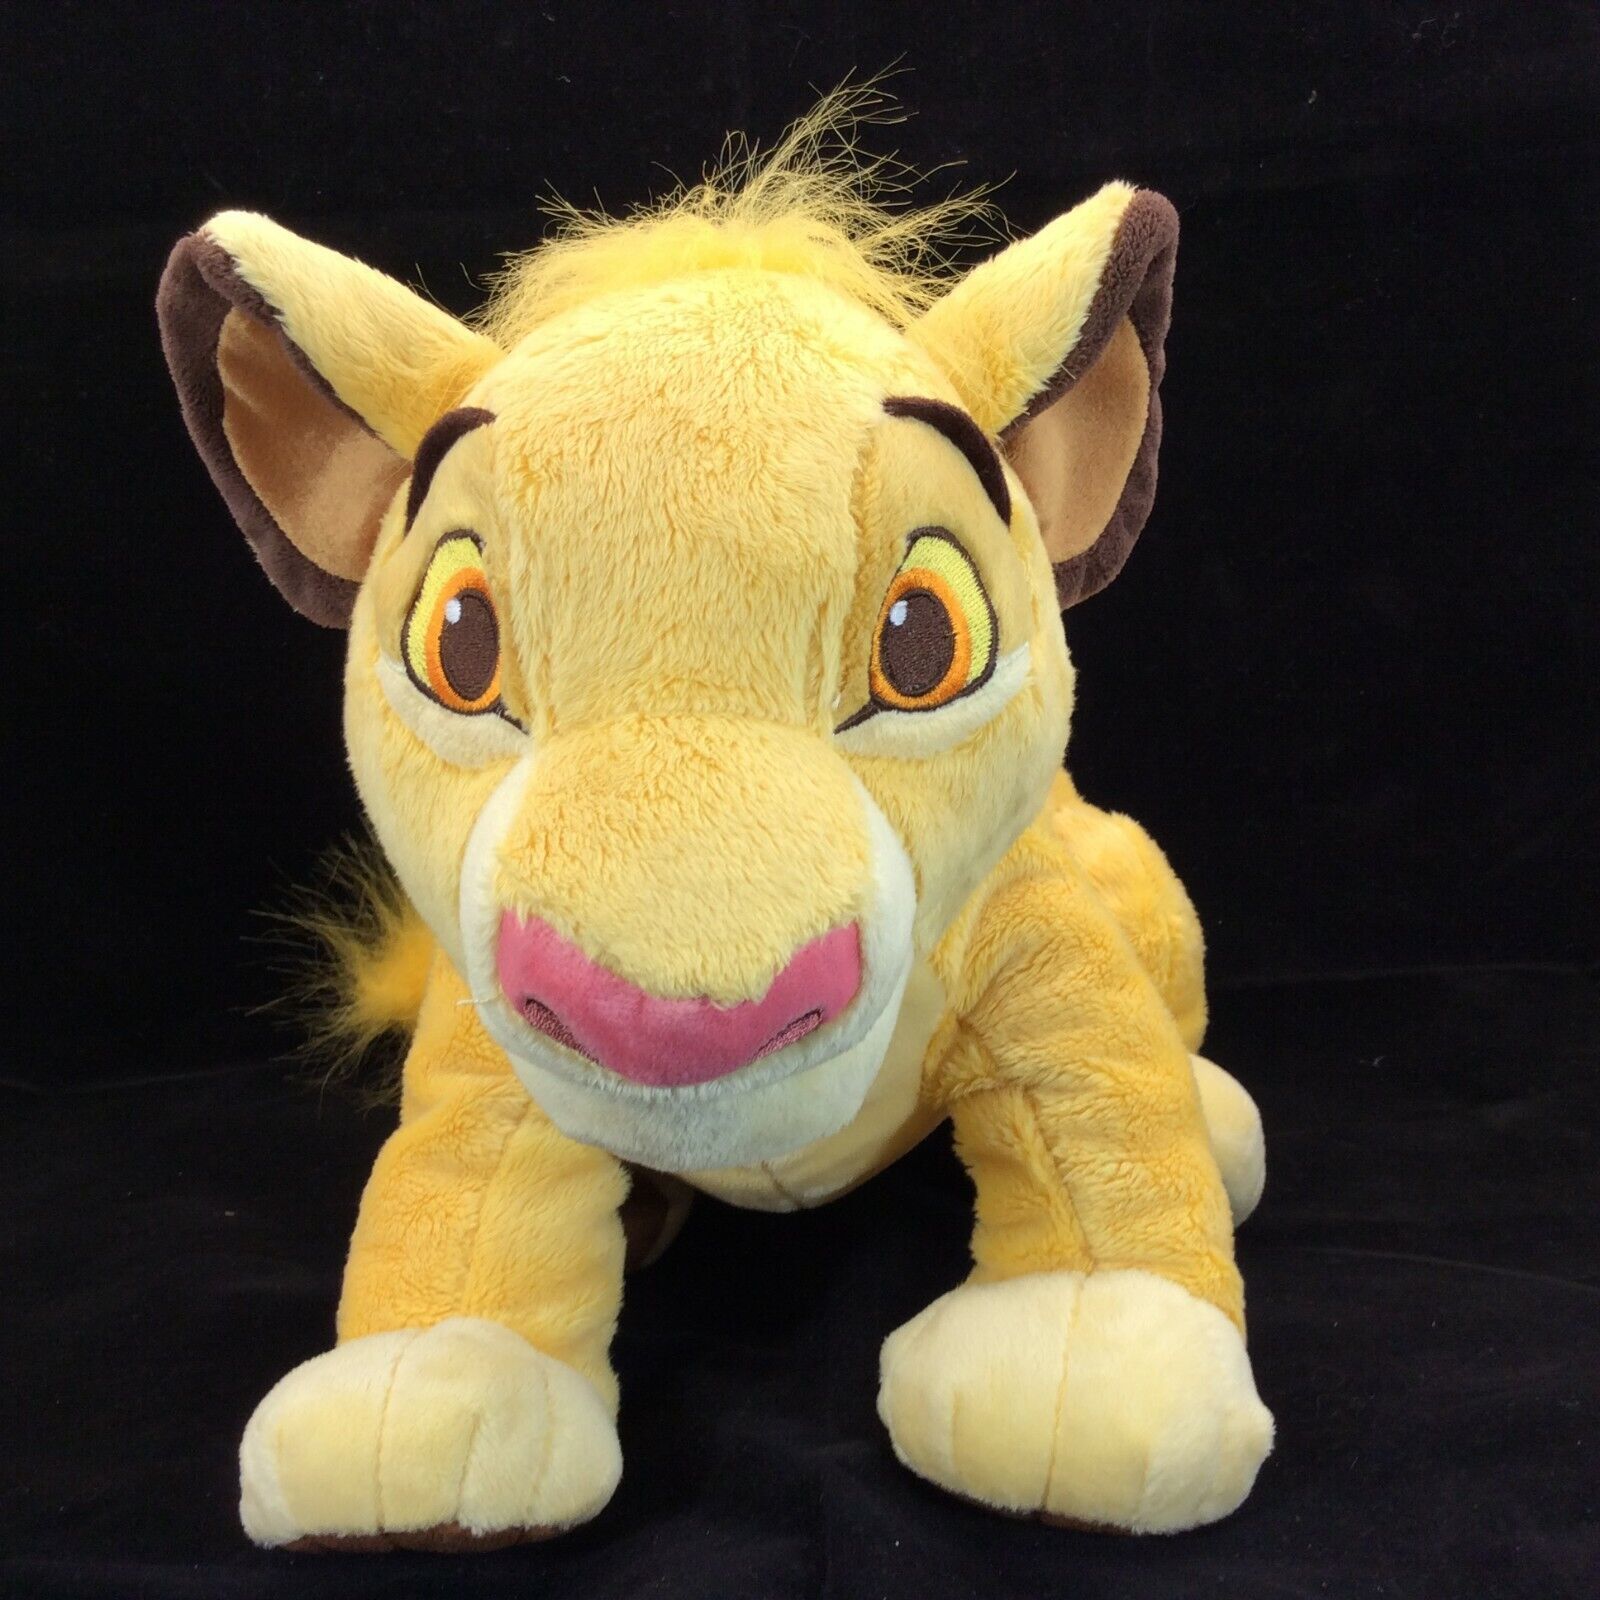 Primary image for Disney SIMBA Lion King Plush SIMBA Stuffed Animal Pillow Toy Soft Cuddly 23" 